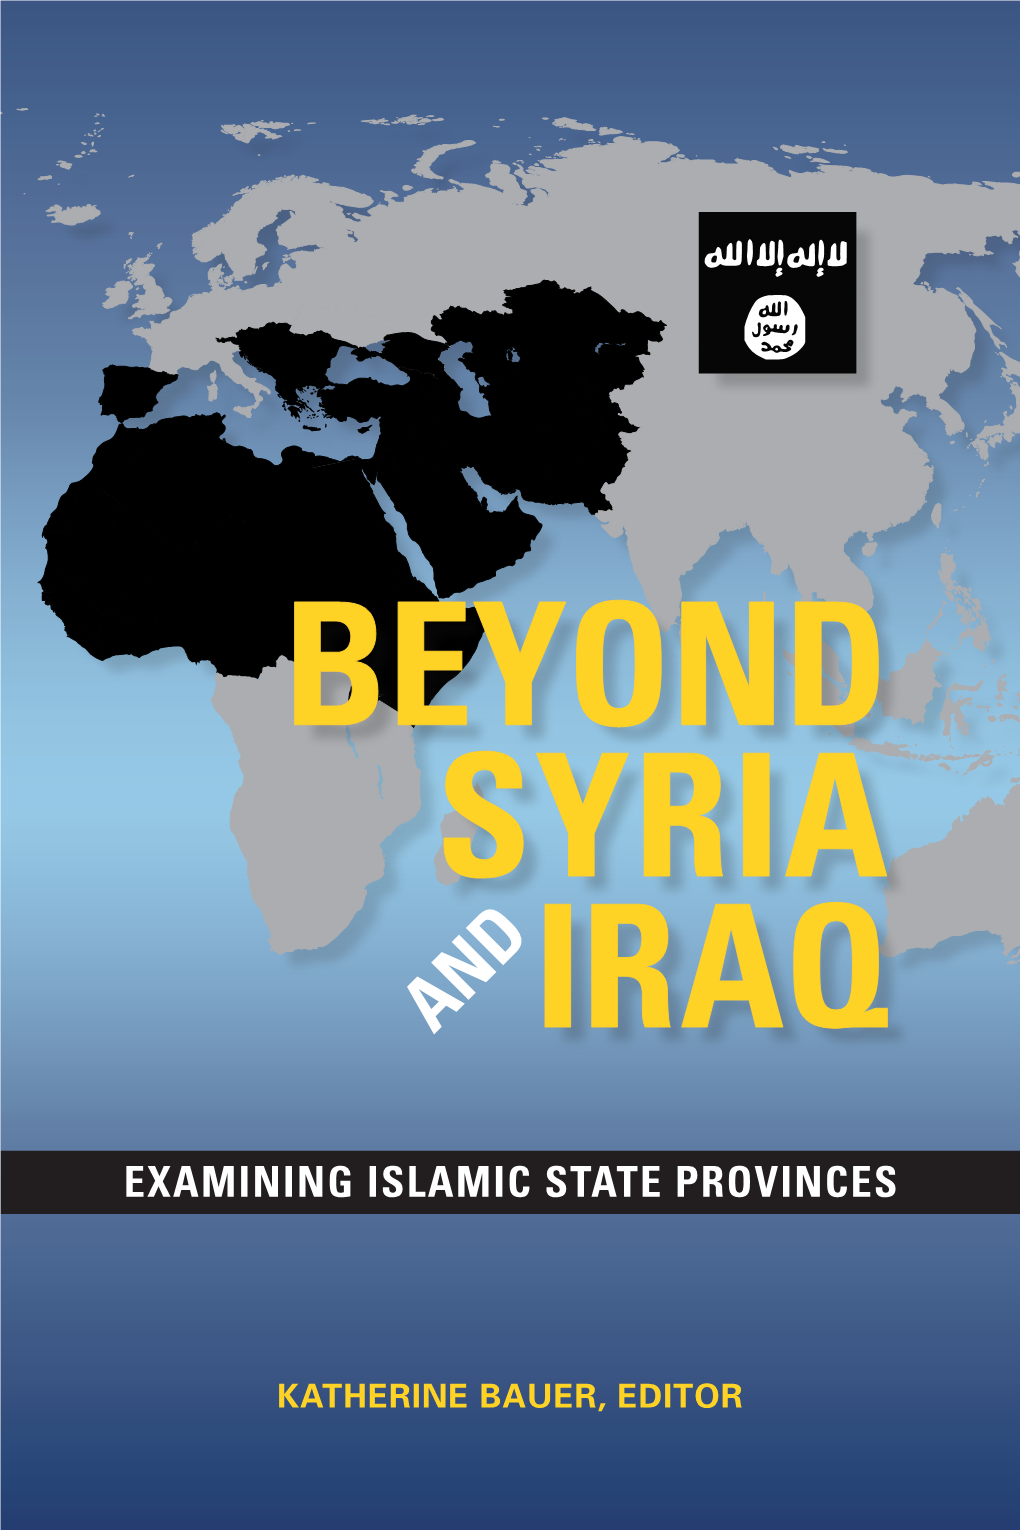 Examining Islamic State Provinces